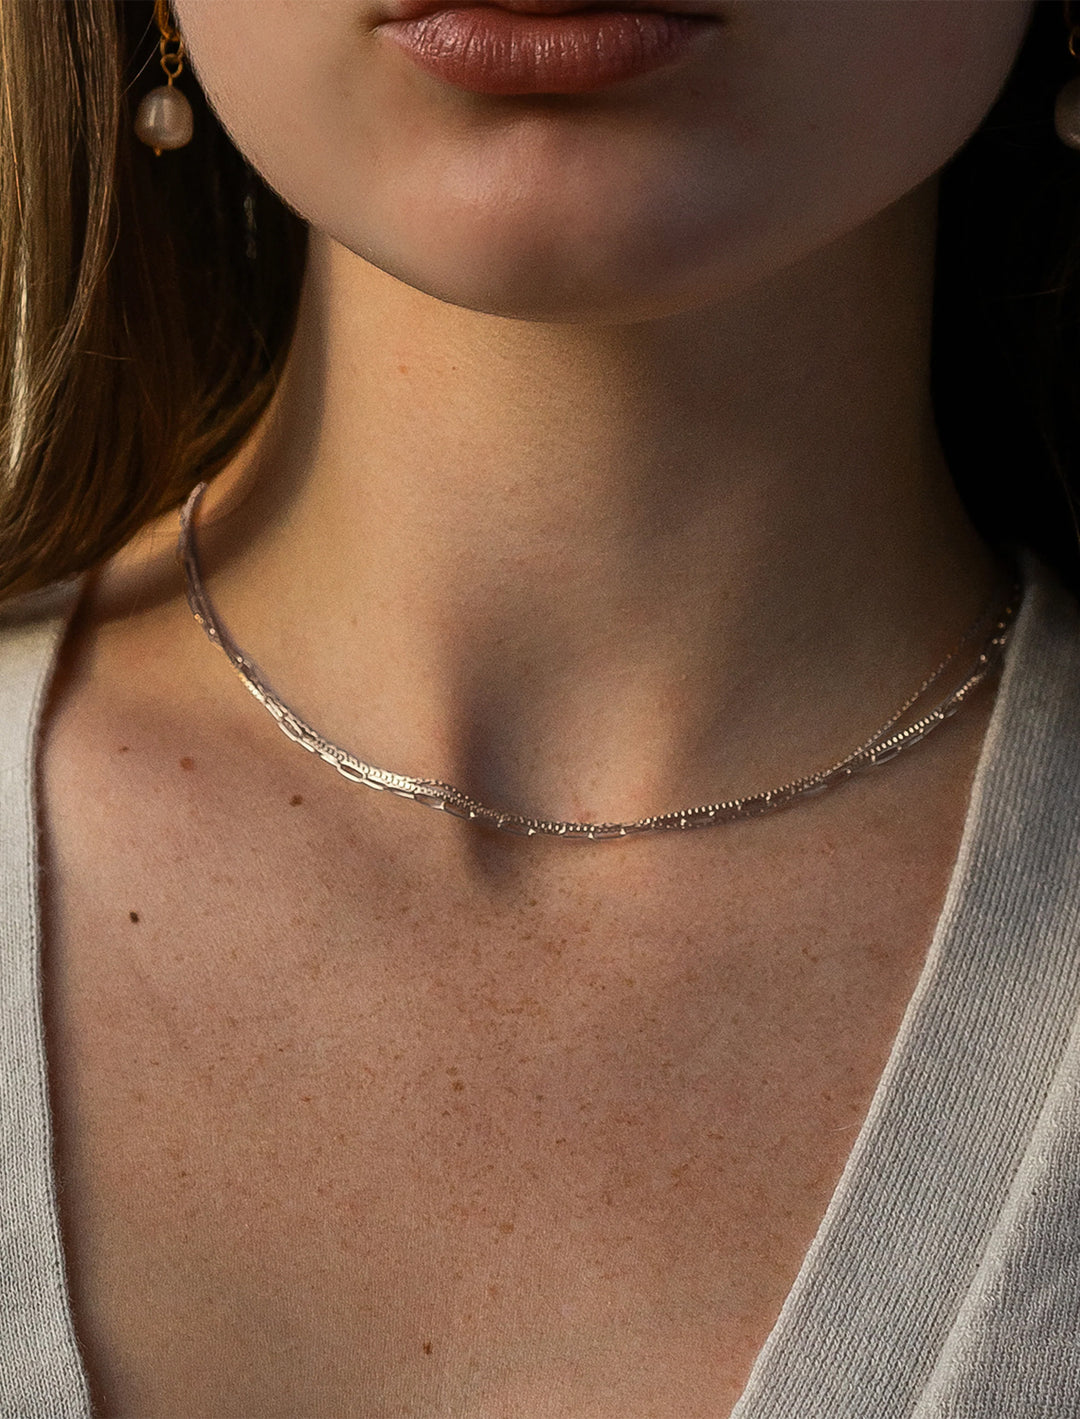 Model wearing THATCH's rosalie necklace in silver.